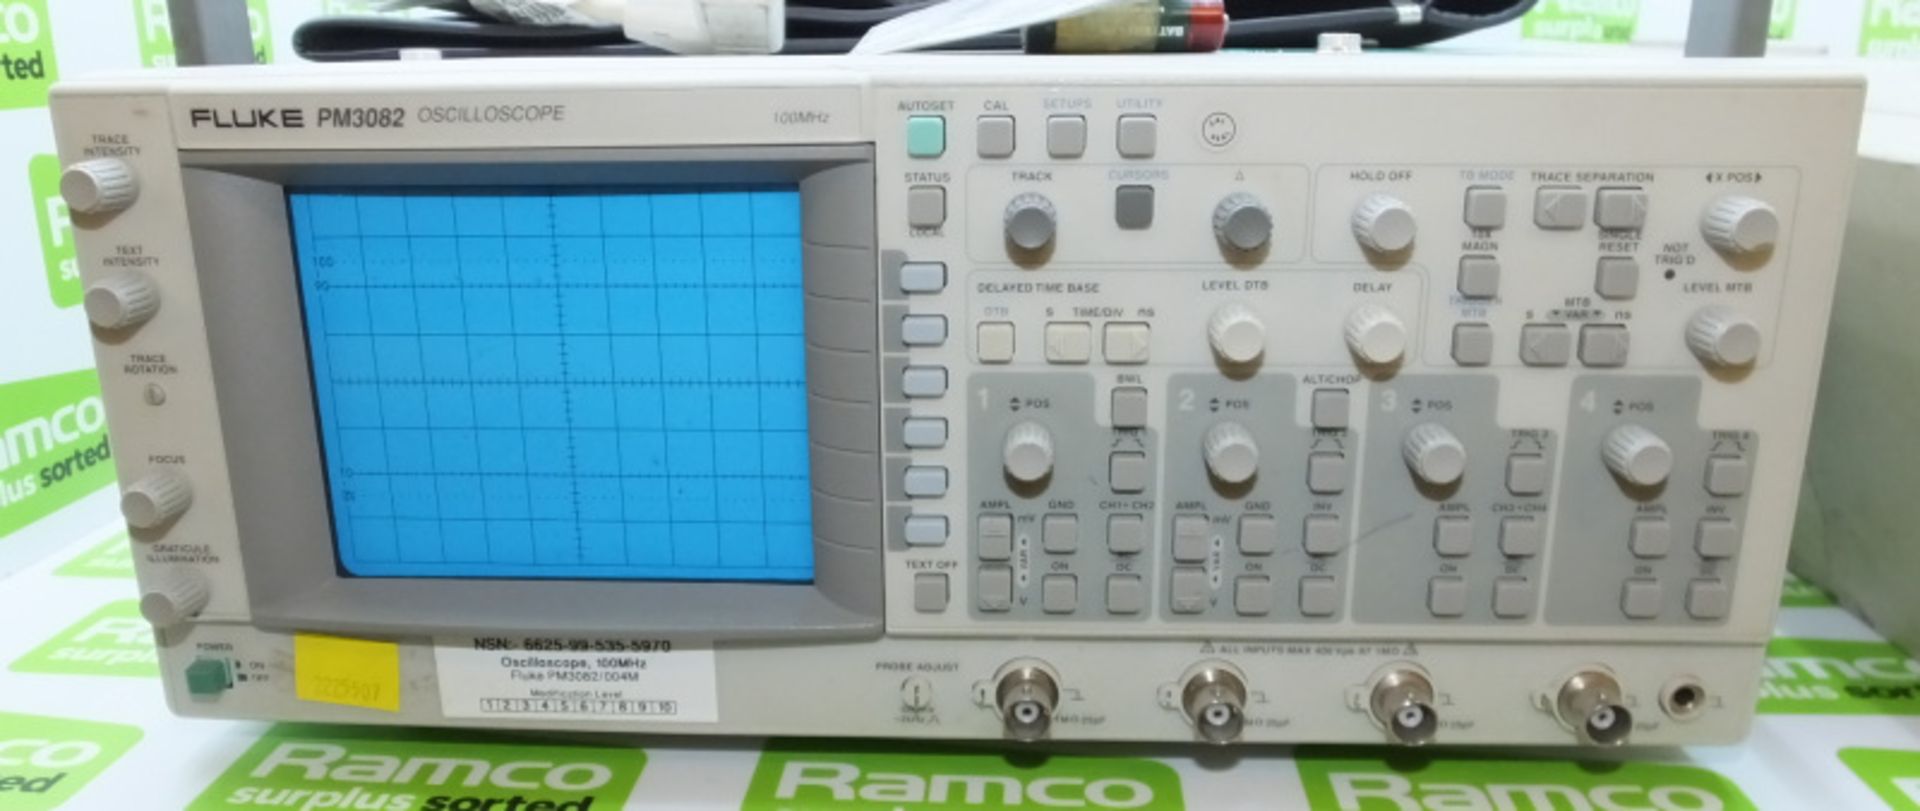 Fluke PM3082 Oscilloscope 100mhz - 3x 10:1 passive probes, 1x 1:1 passive probes, manual, accessory - Image 2 of 5